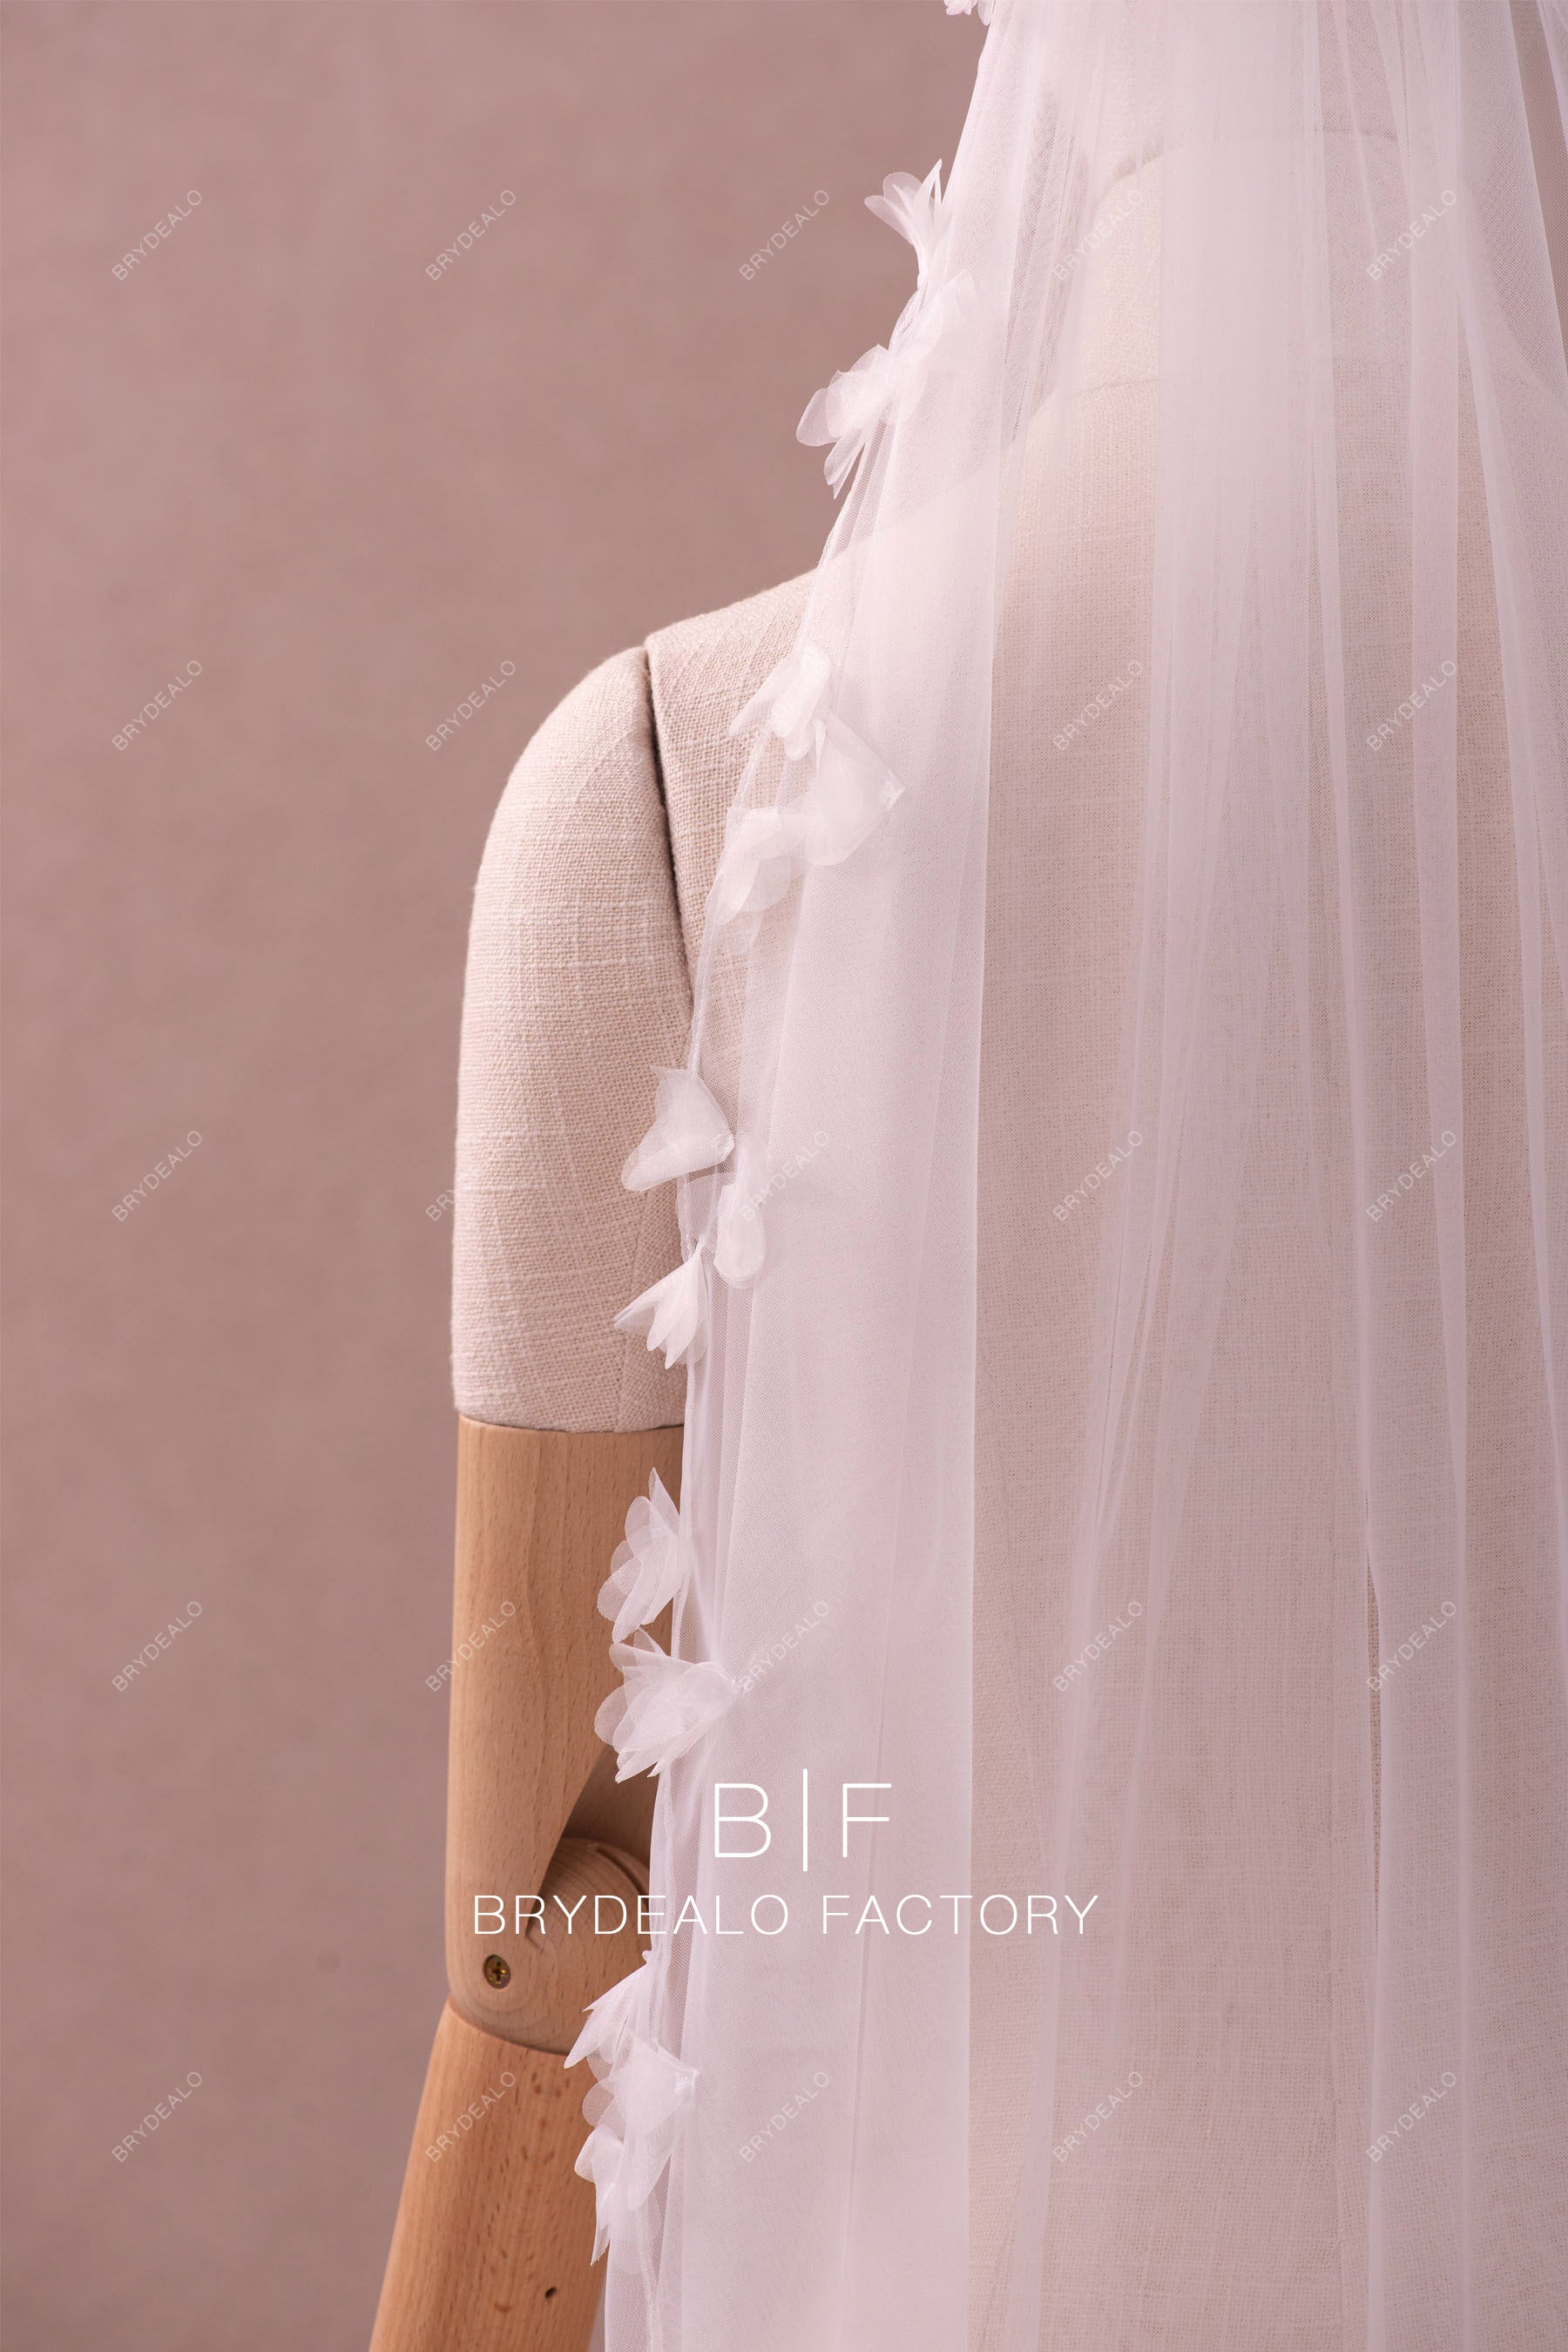 Brydealo Factory Private Label Ballet Length Horsehair Bridal Veil